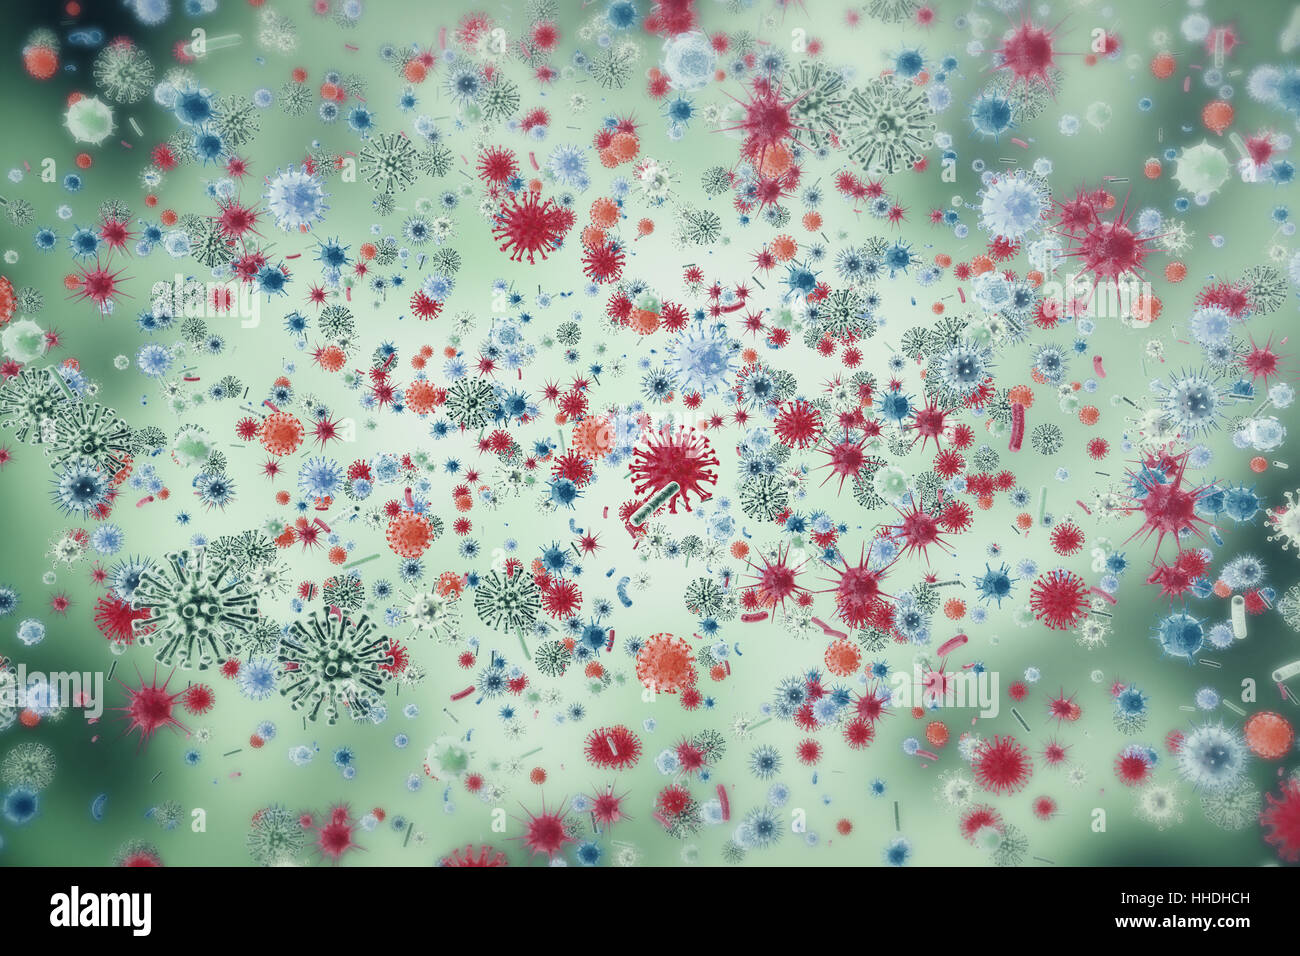 Viruses in infected organism, viral disease epidemic, virus abstract background. 3d rendering Stock Photo